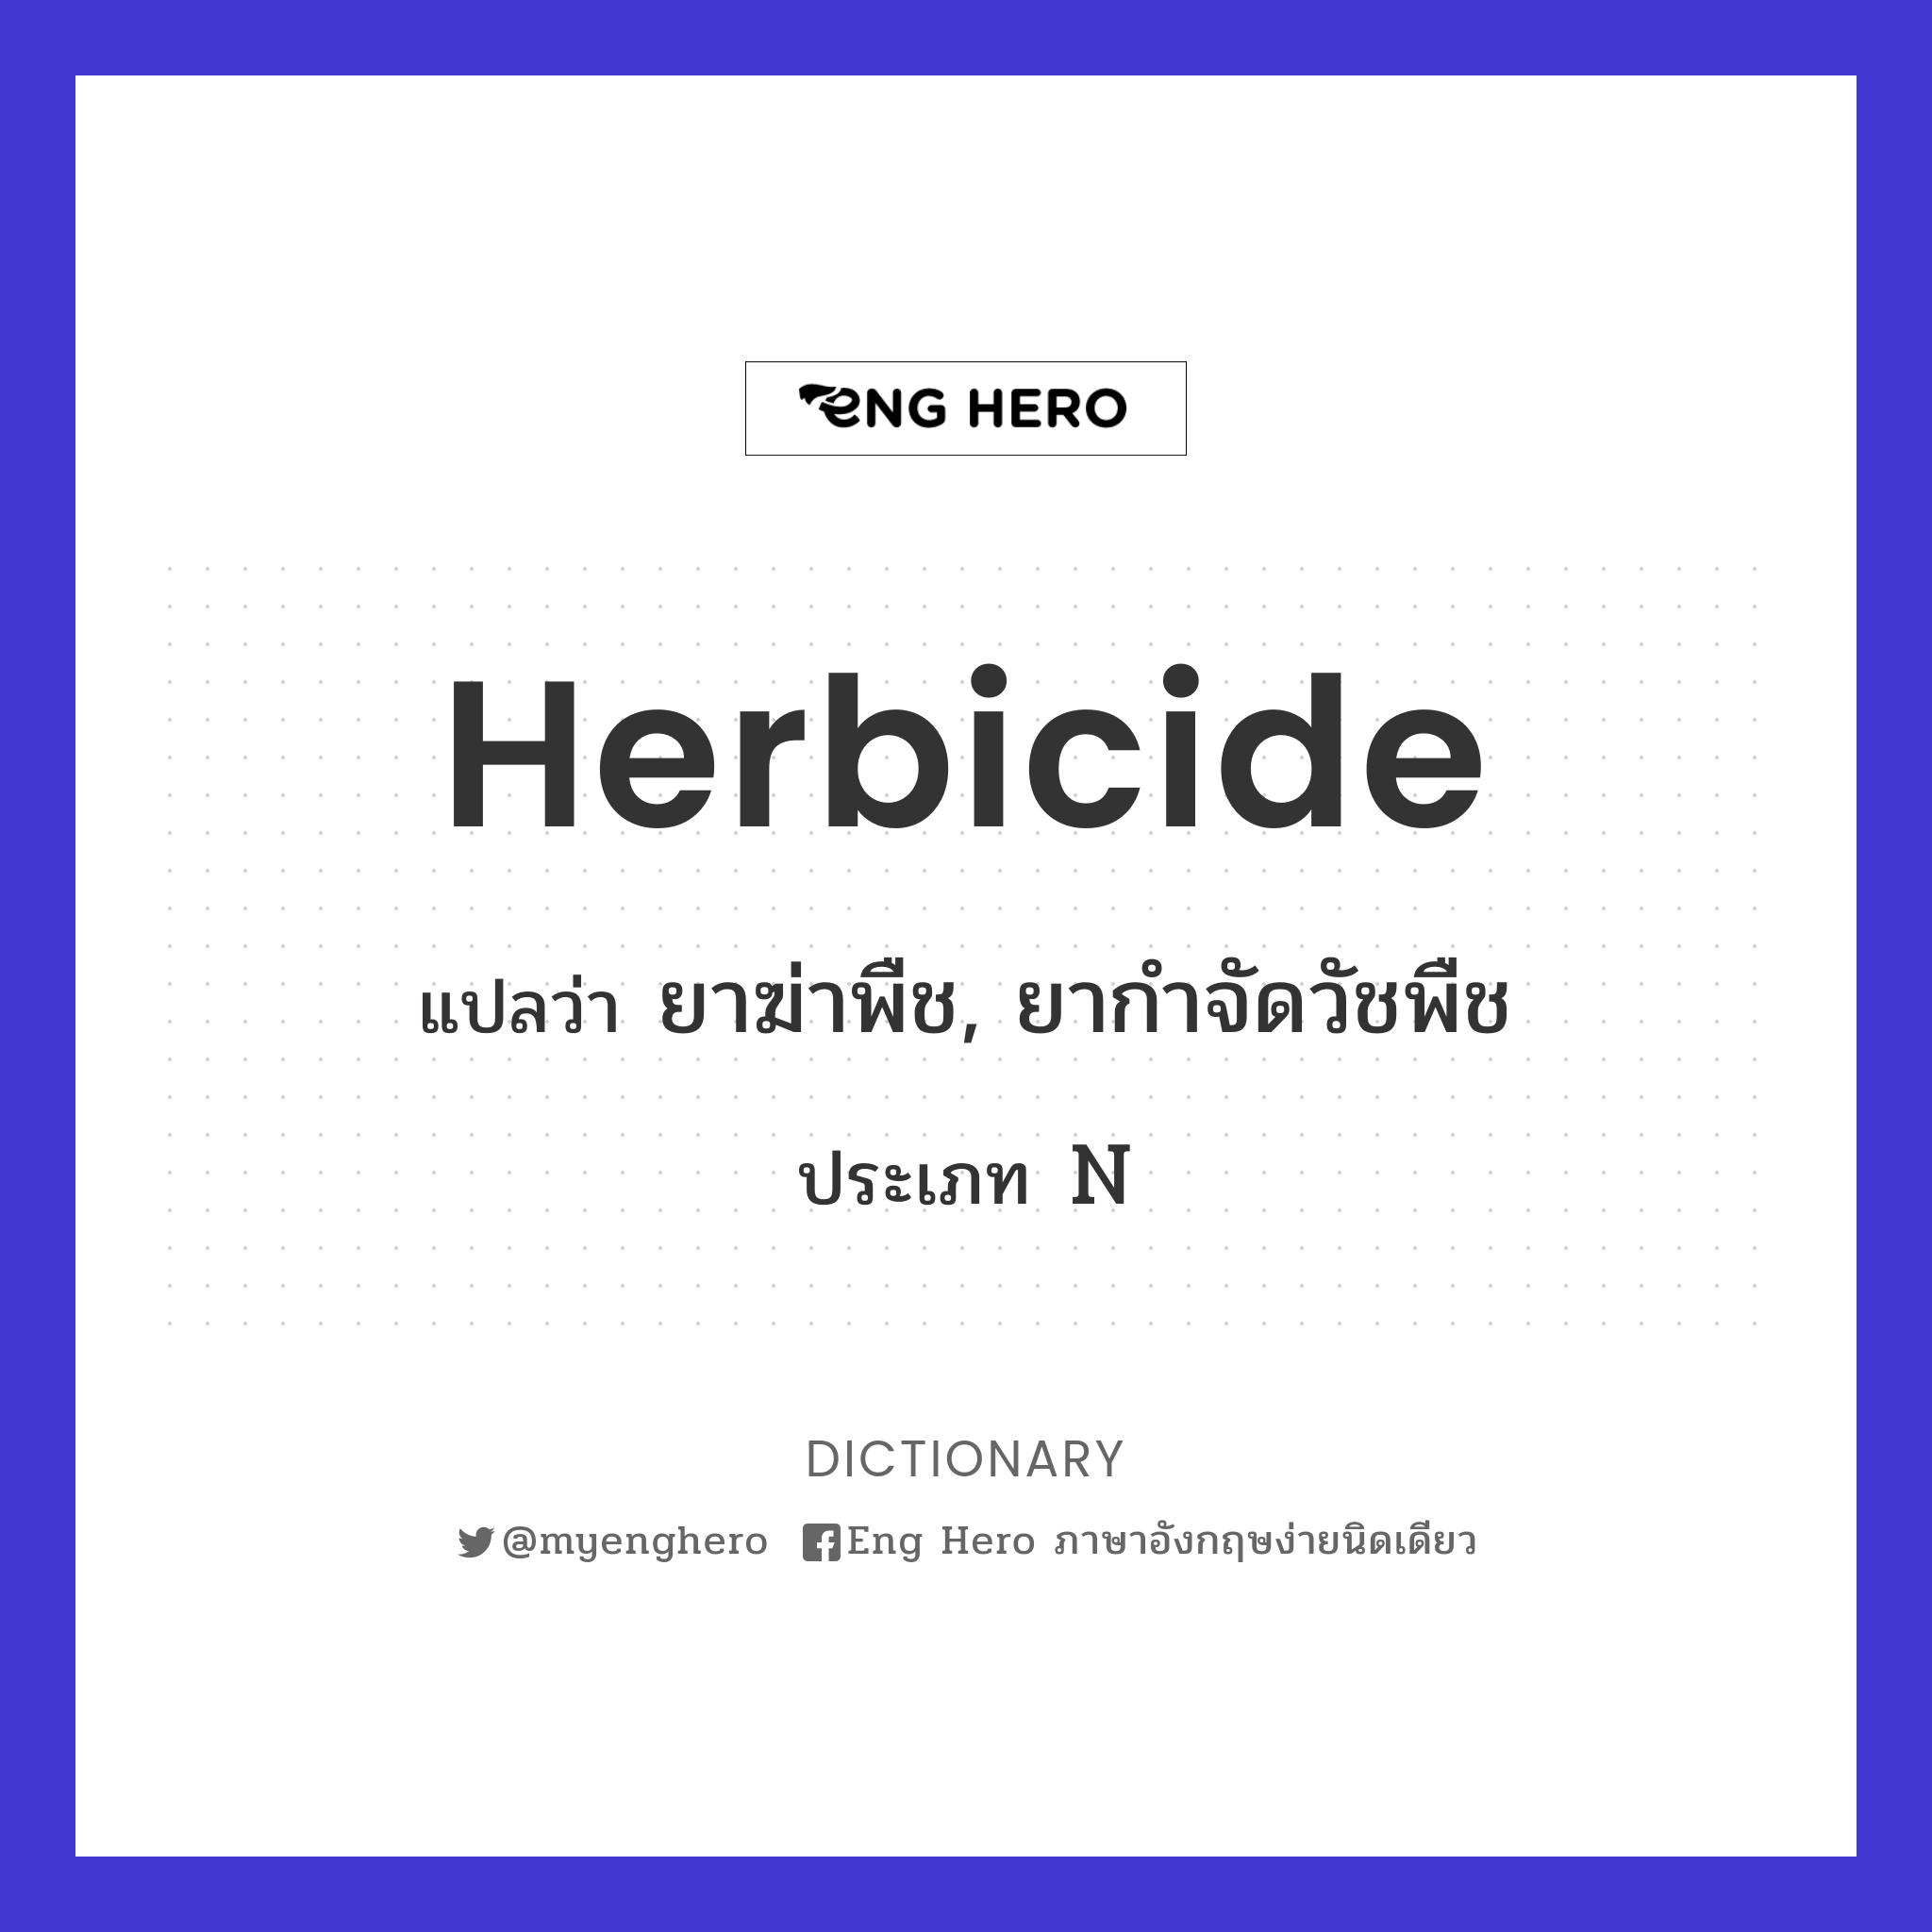 herbicide